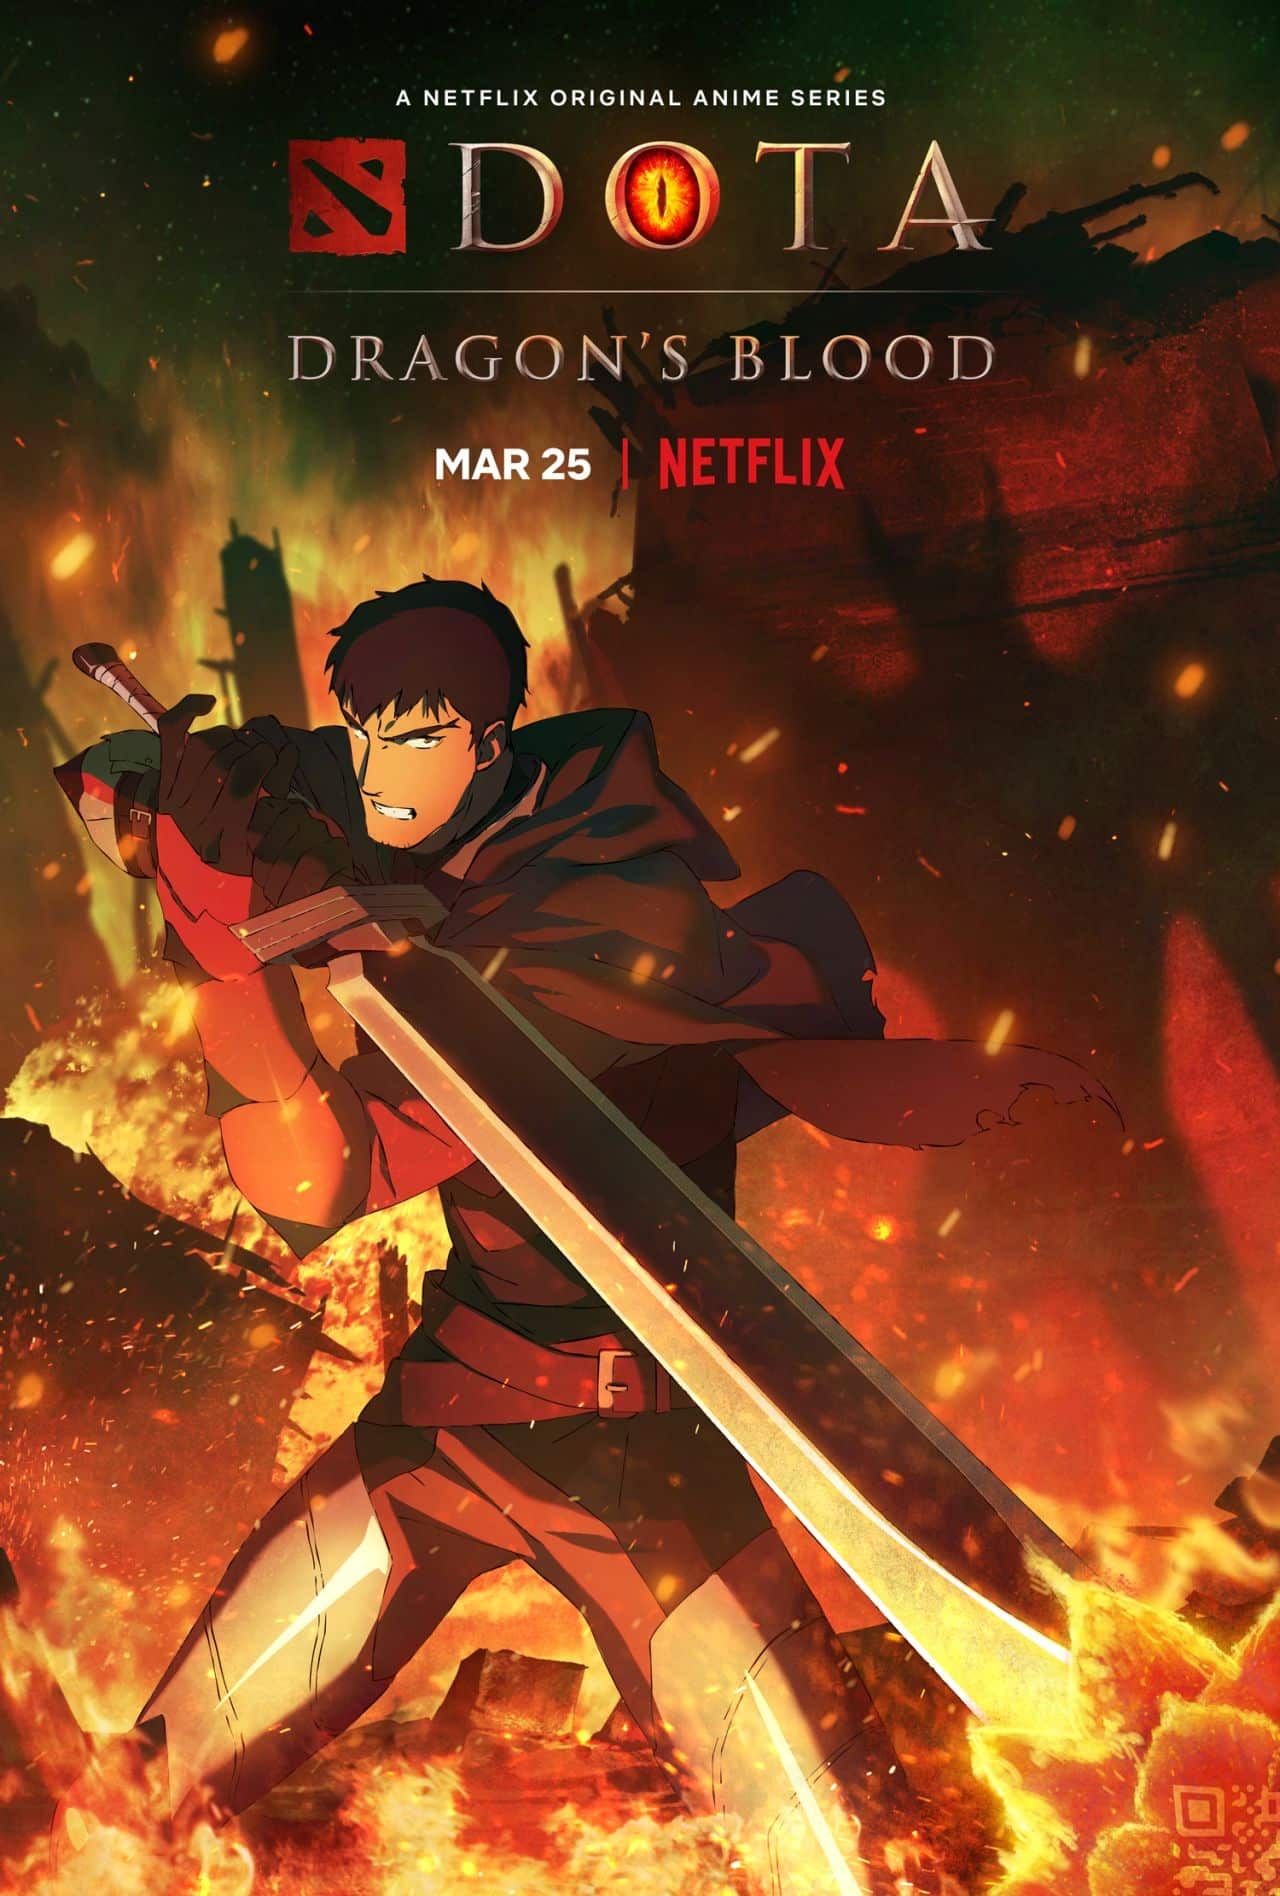 DOTA: Dragon's Blood trailer poster